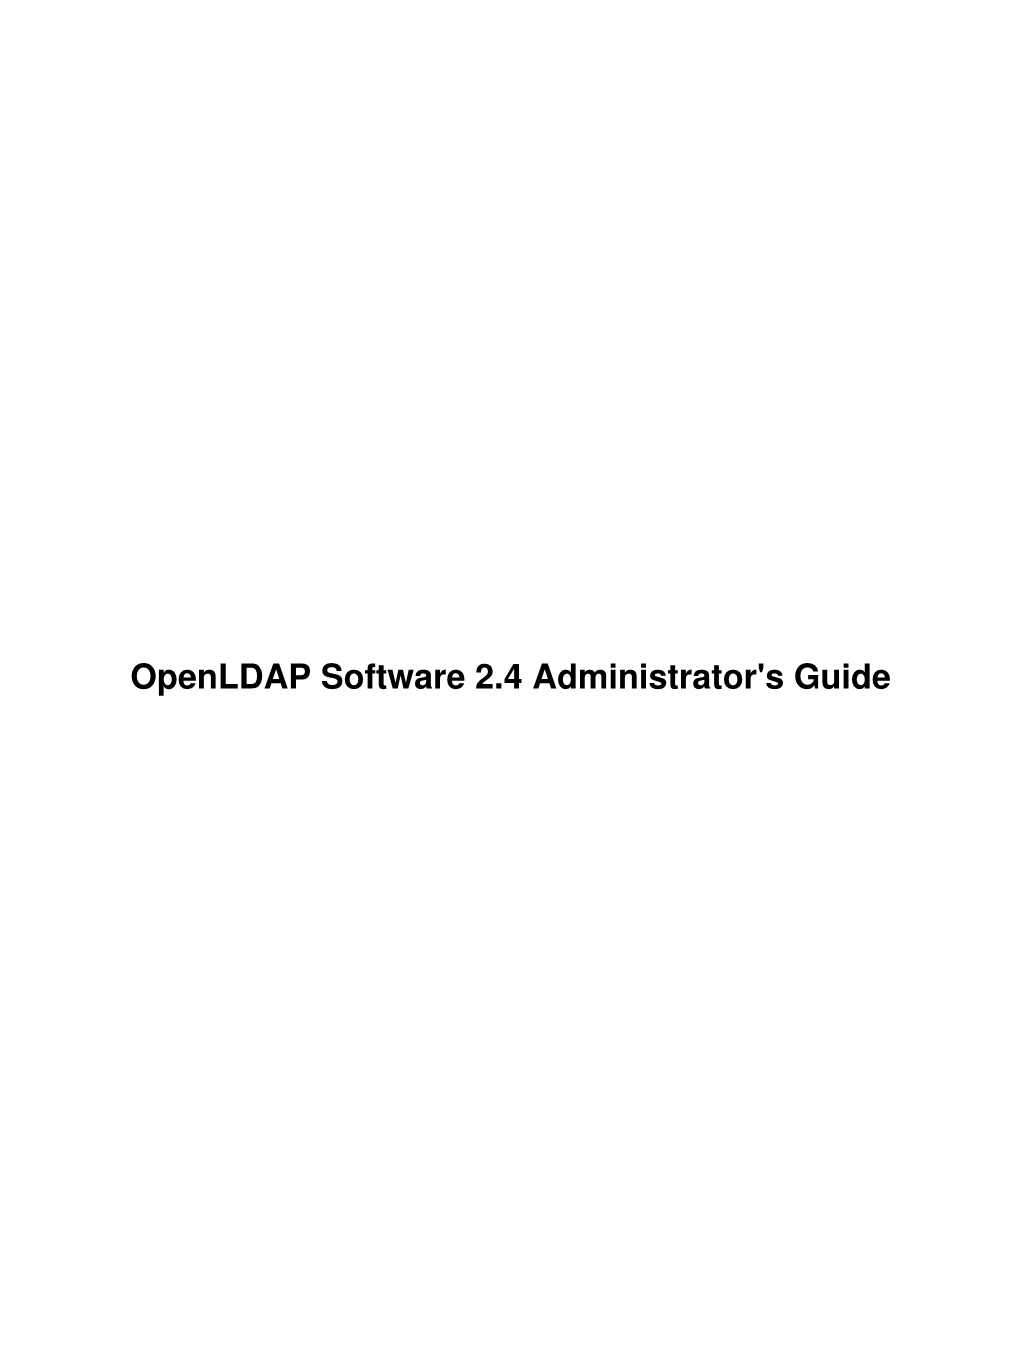 Openldap Software 2.4 Administrator's Guide Openldap Software 2.4 Administrator's Guide Table of Contents Preface